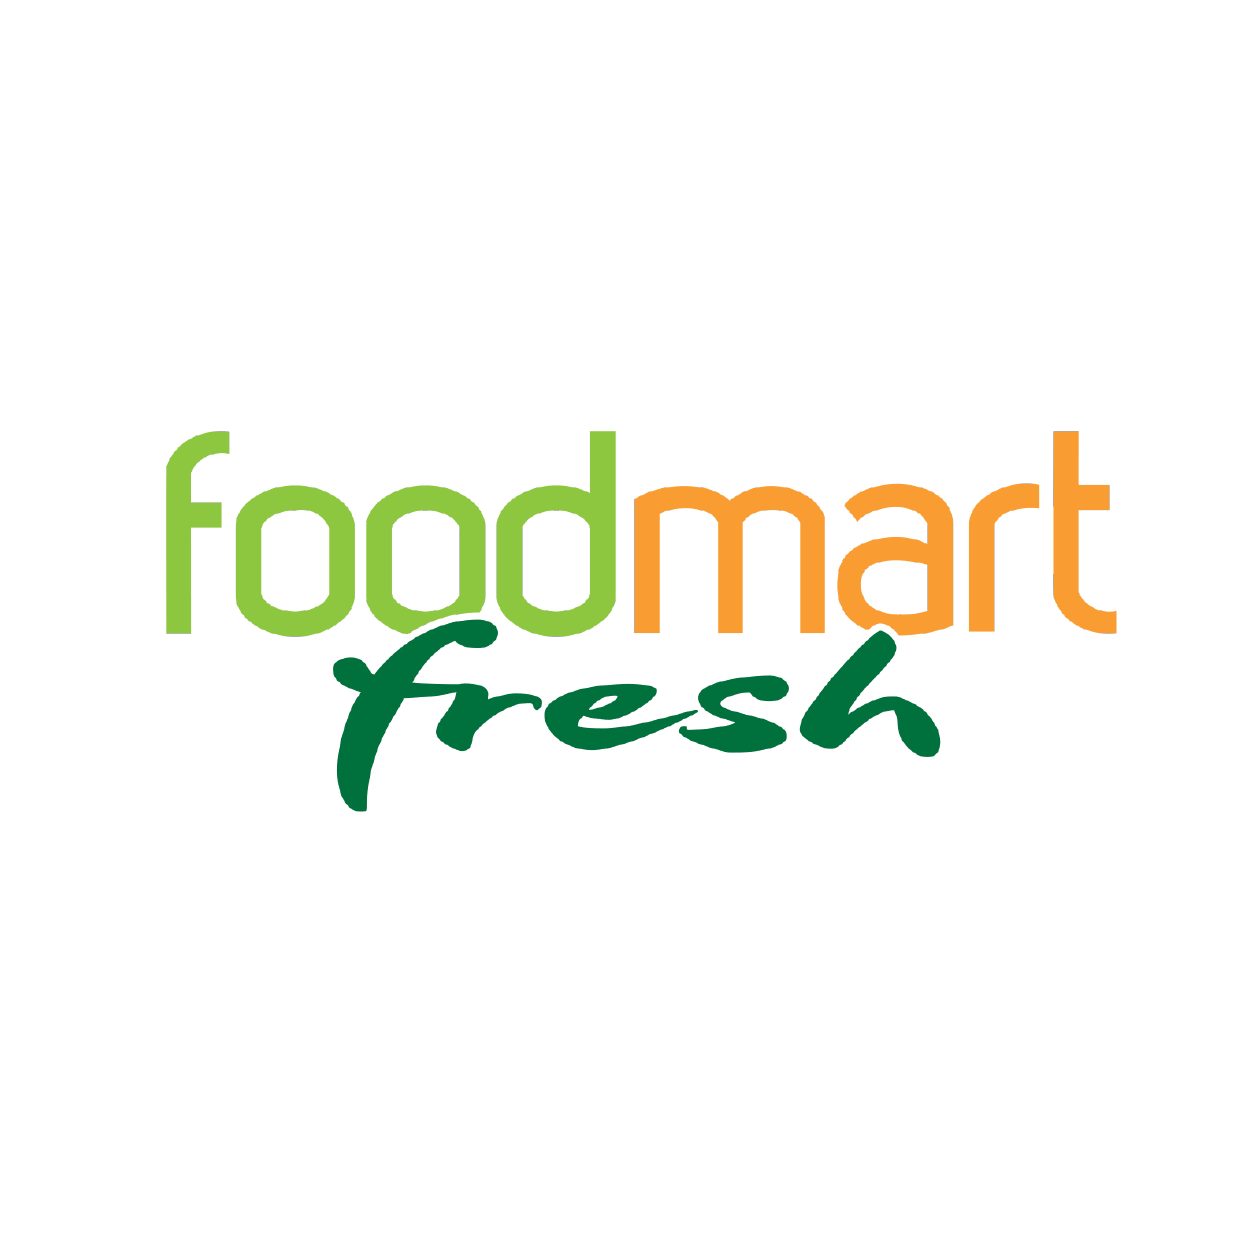 Foodmart Fresh